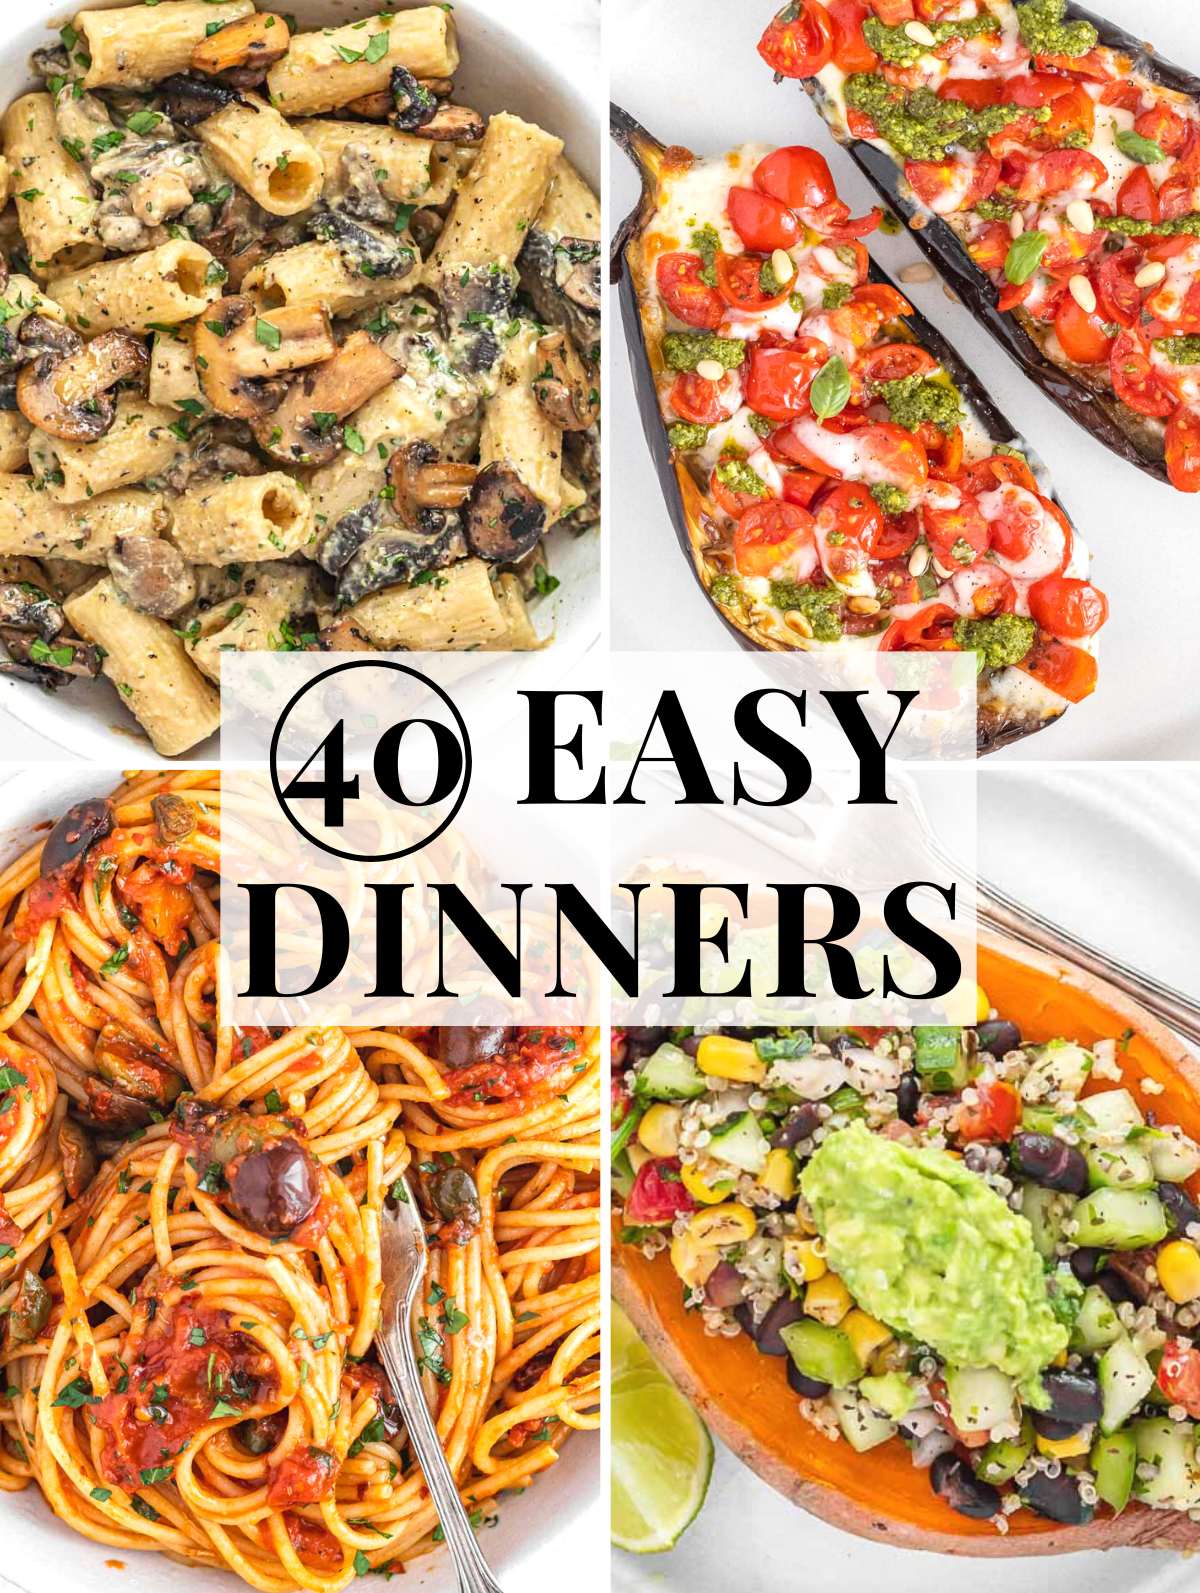 Easy dinners pasta and veggies